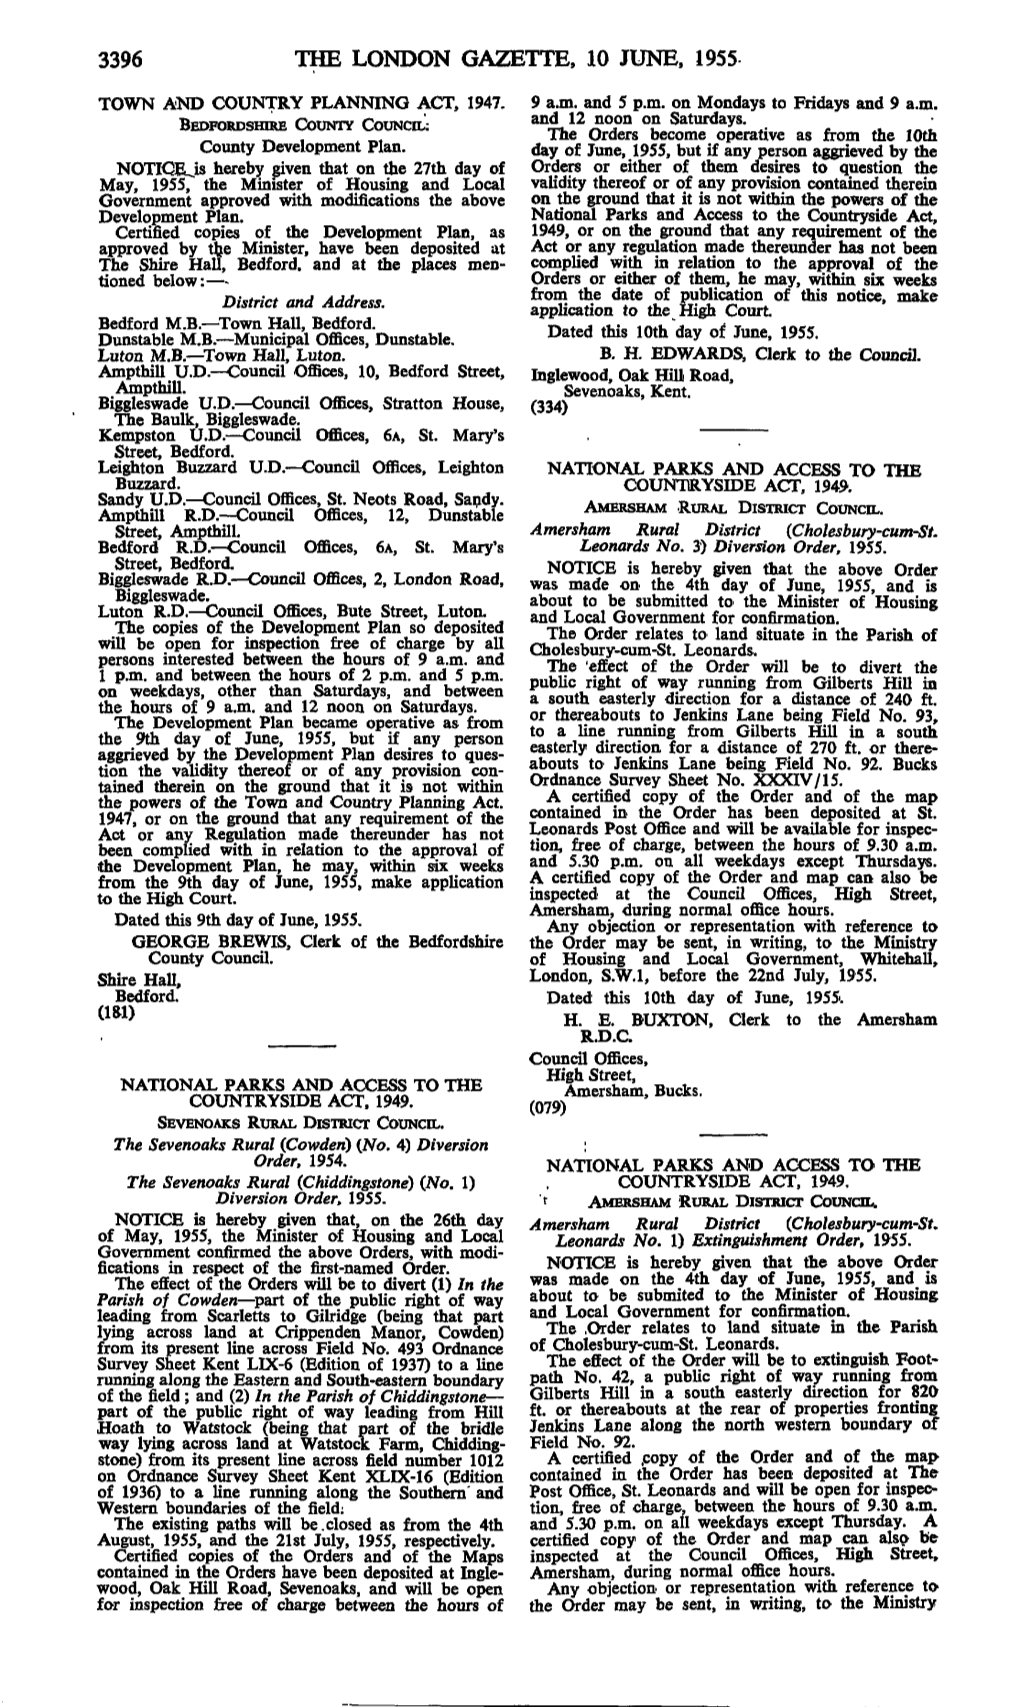 3396 the London Gazette, 10 June, 1955